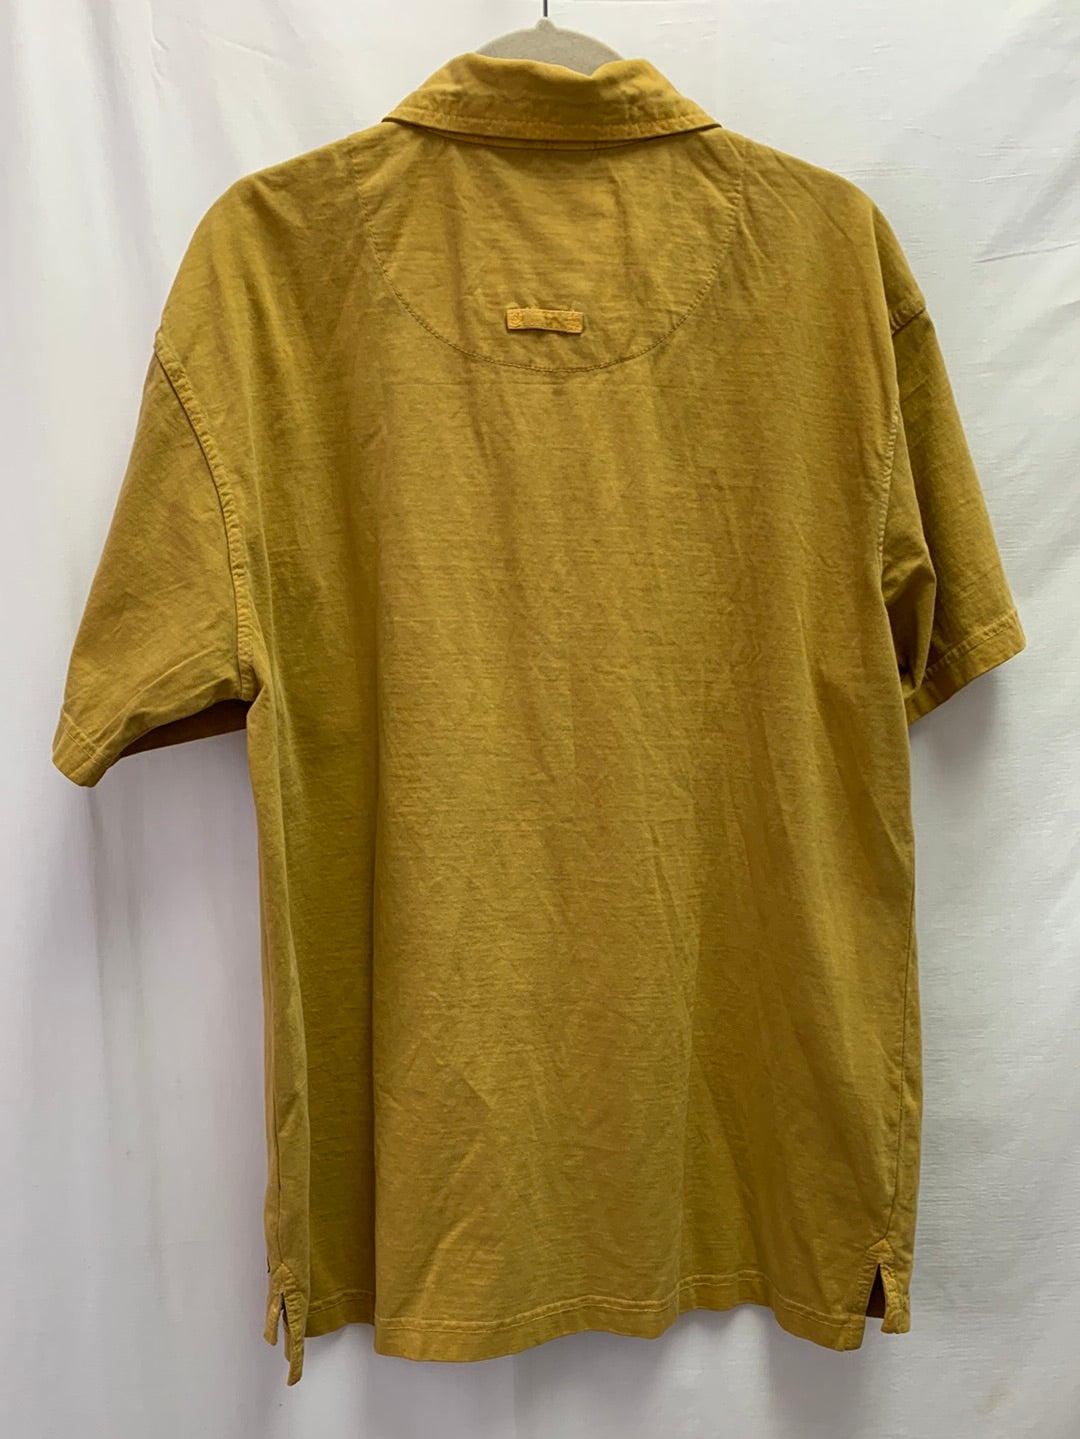 NWT - SMITH'S WORKWEAR old gold Veg. Dye Canvas Collar Polo Shirt - XL